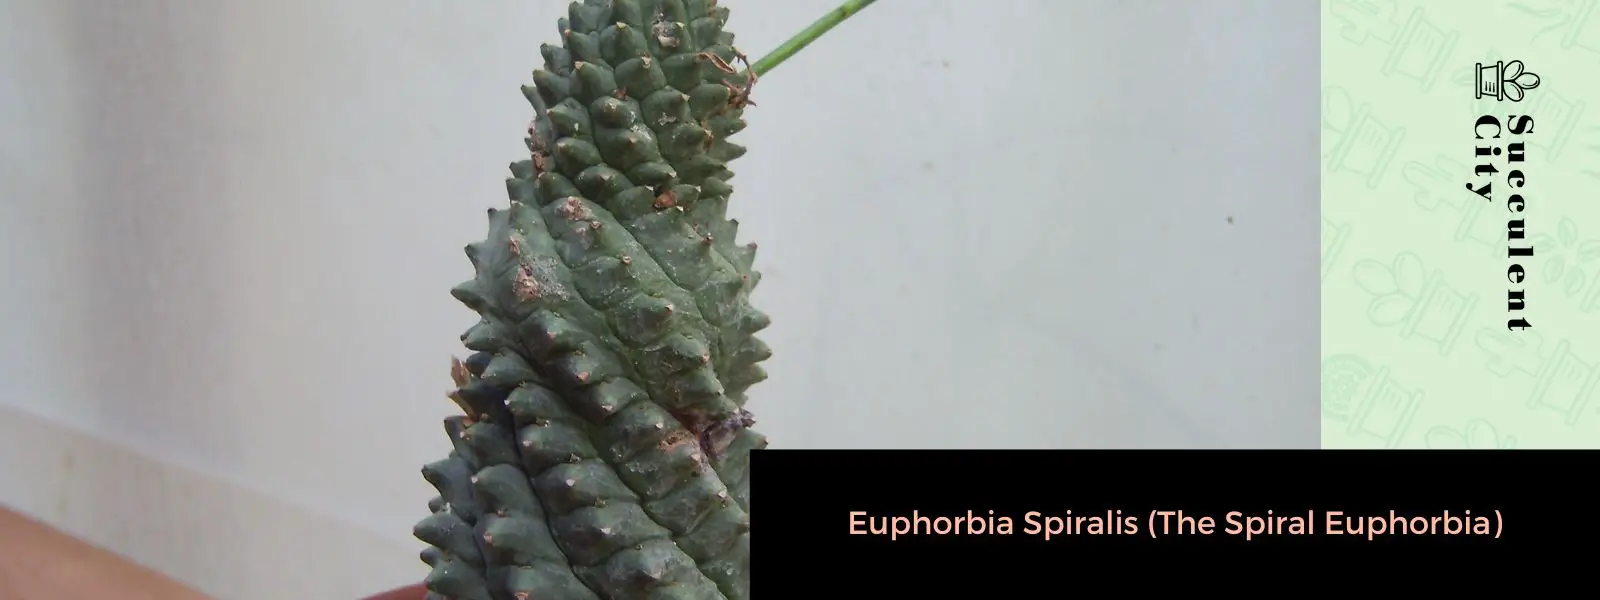 Euphorbia Spiralis (La Euphorbia Espiral)